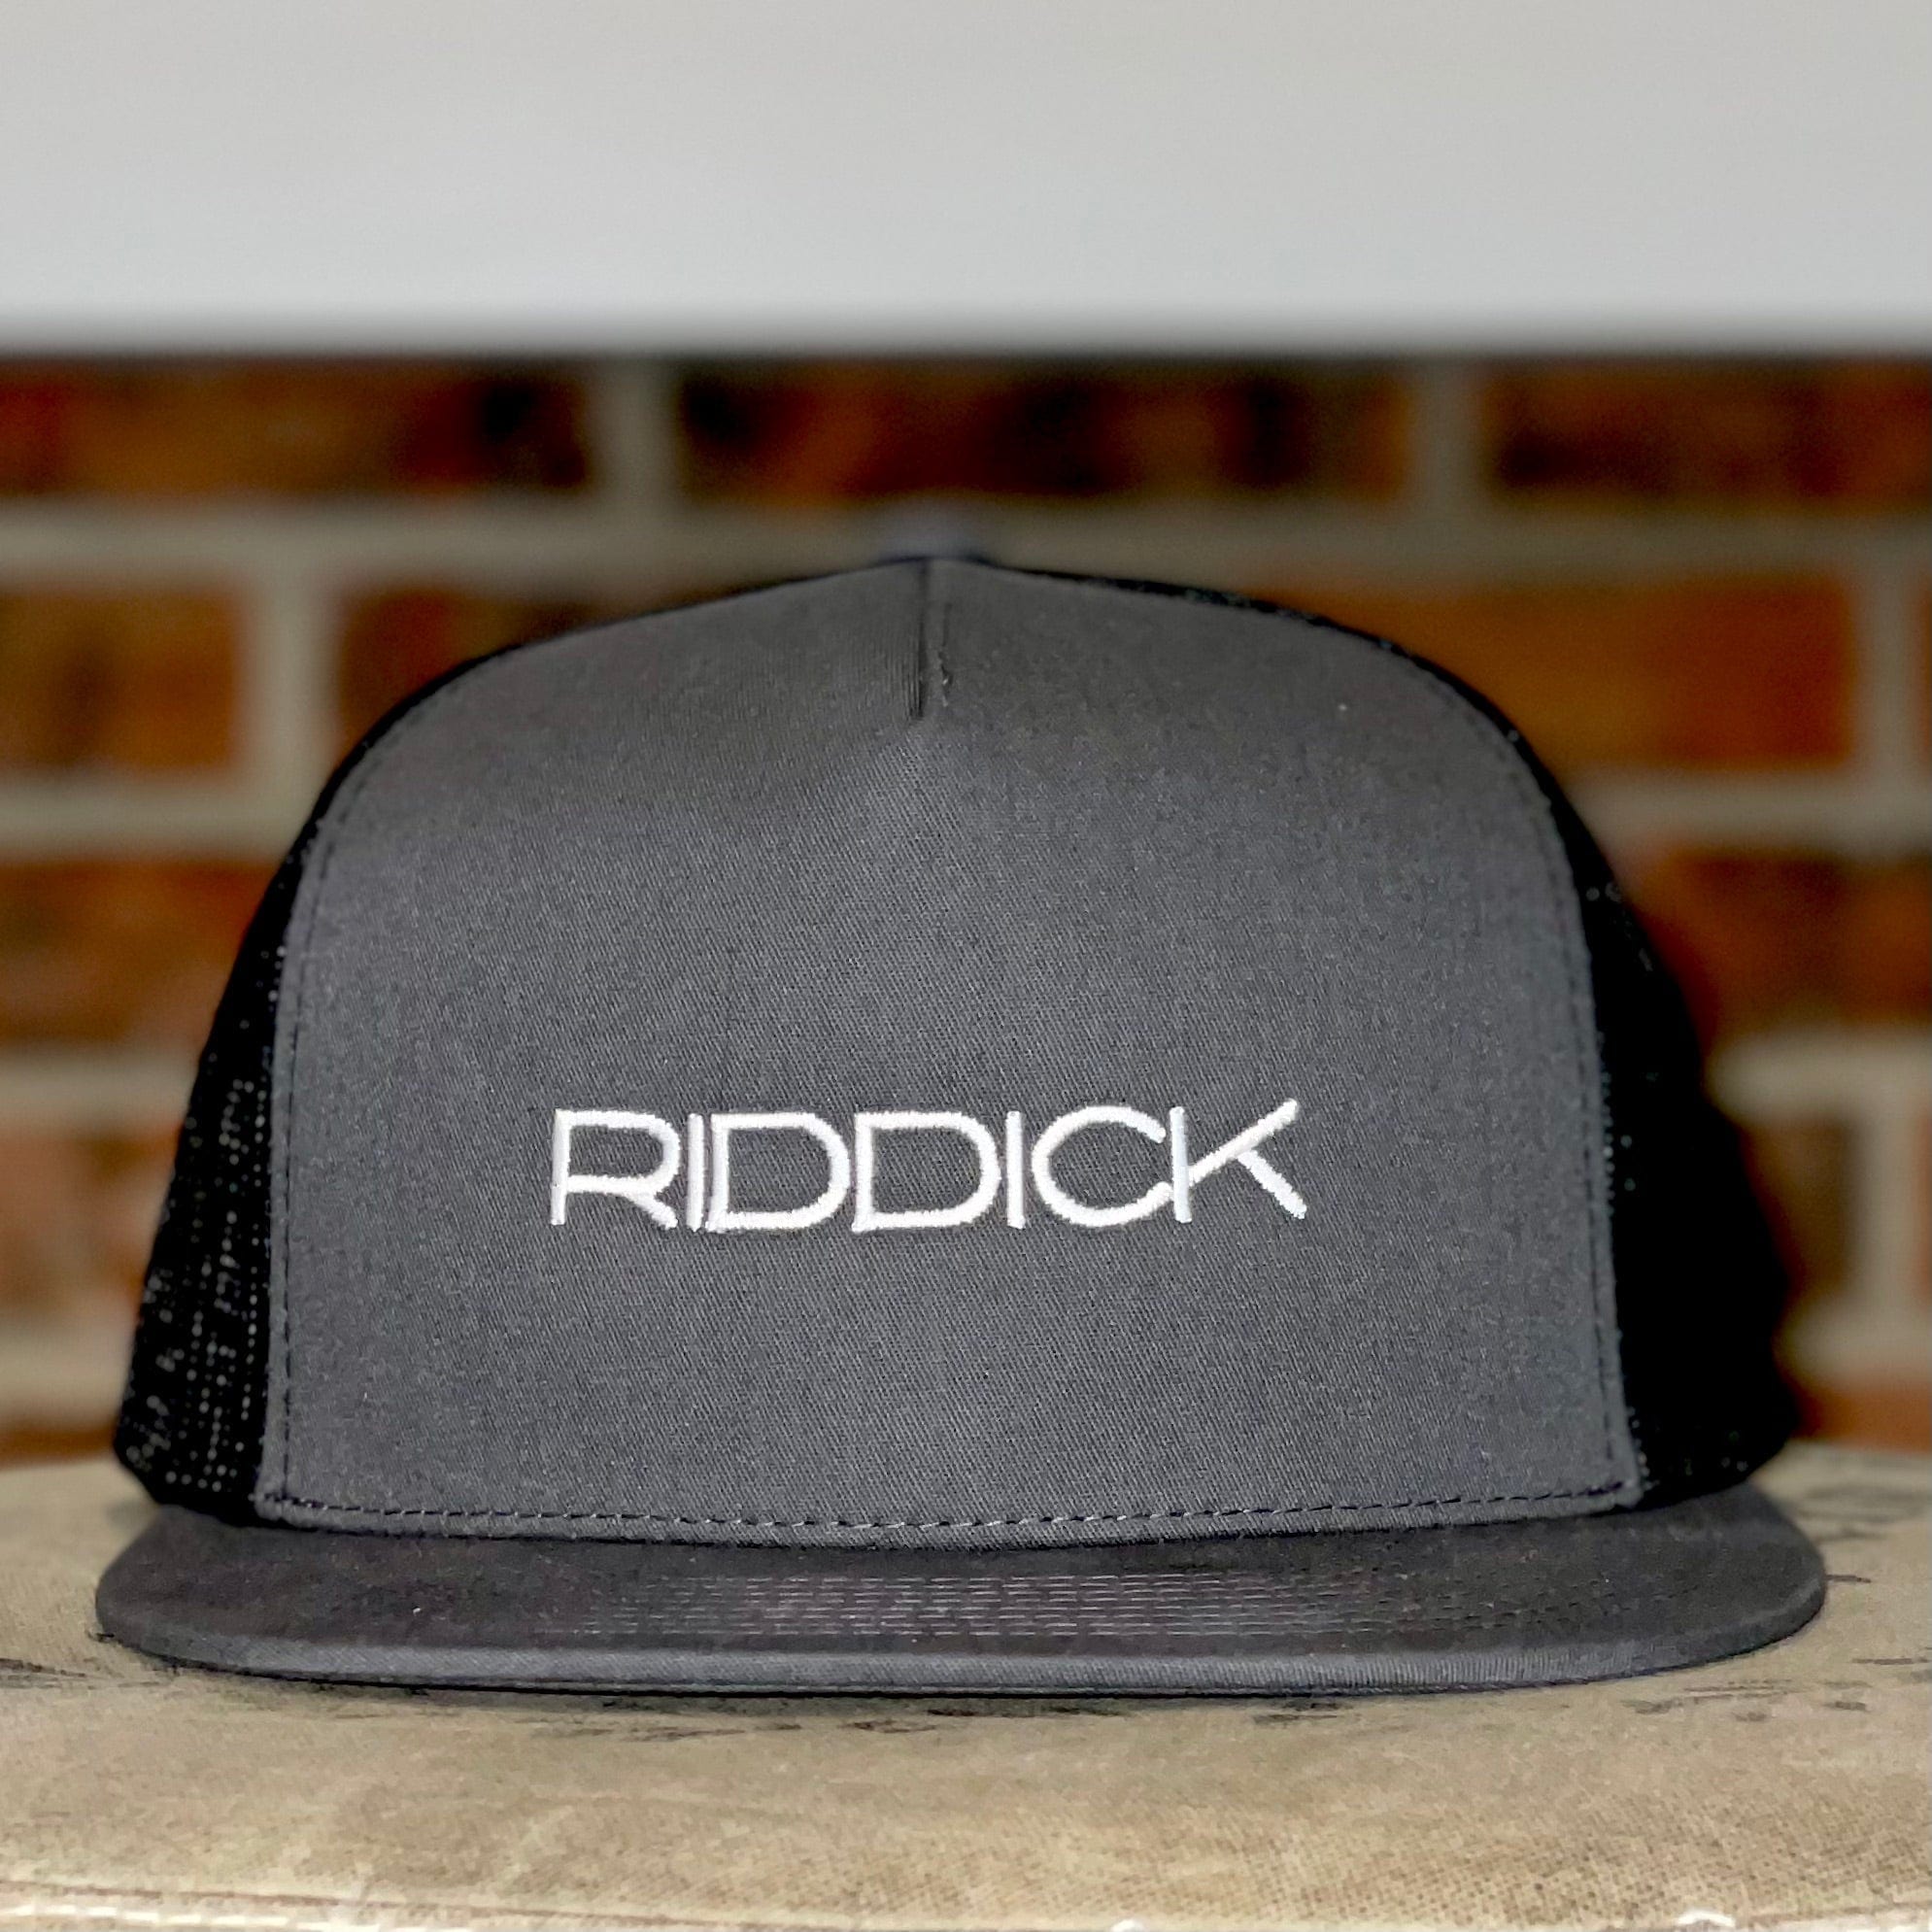 RIDDICK LOGO HATS - Riddick Shoes Hat Riddick Shoes   